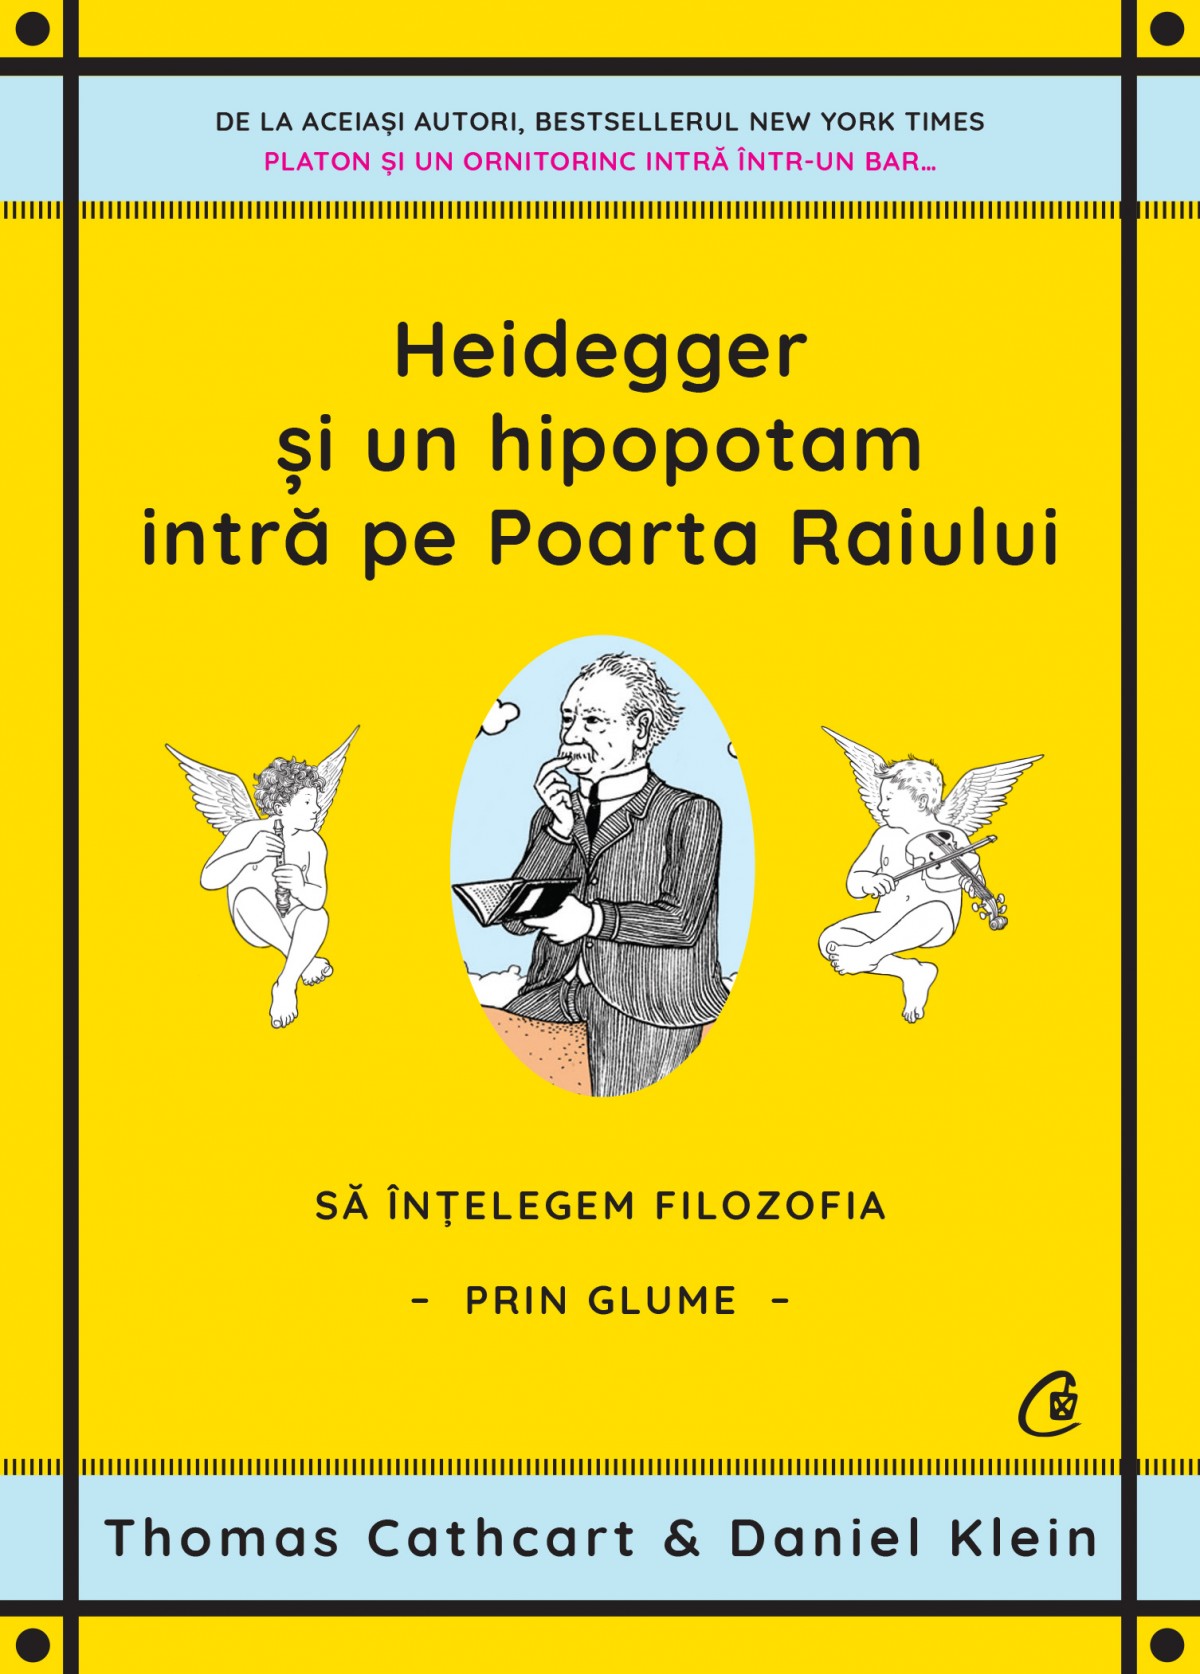 Heidegger si un hipopotam intra pe Portile Raiului | Thomas Cathcart, Daniel Klein carturesti.ro poza bestsellers.ro